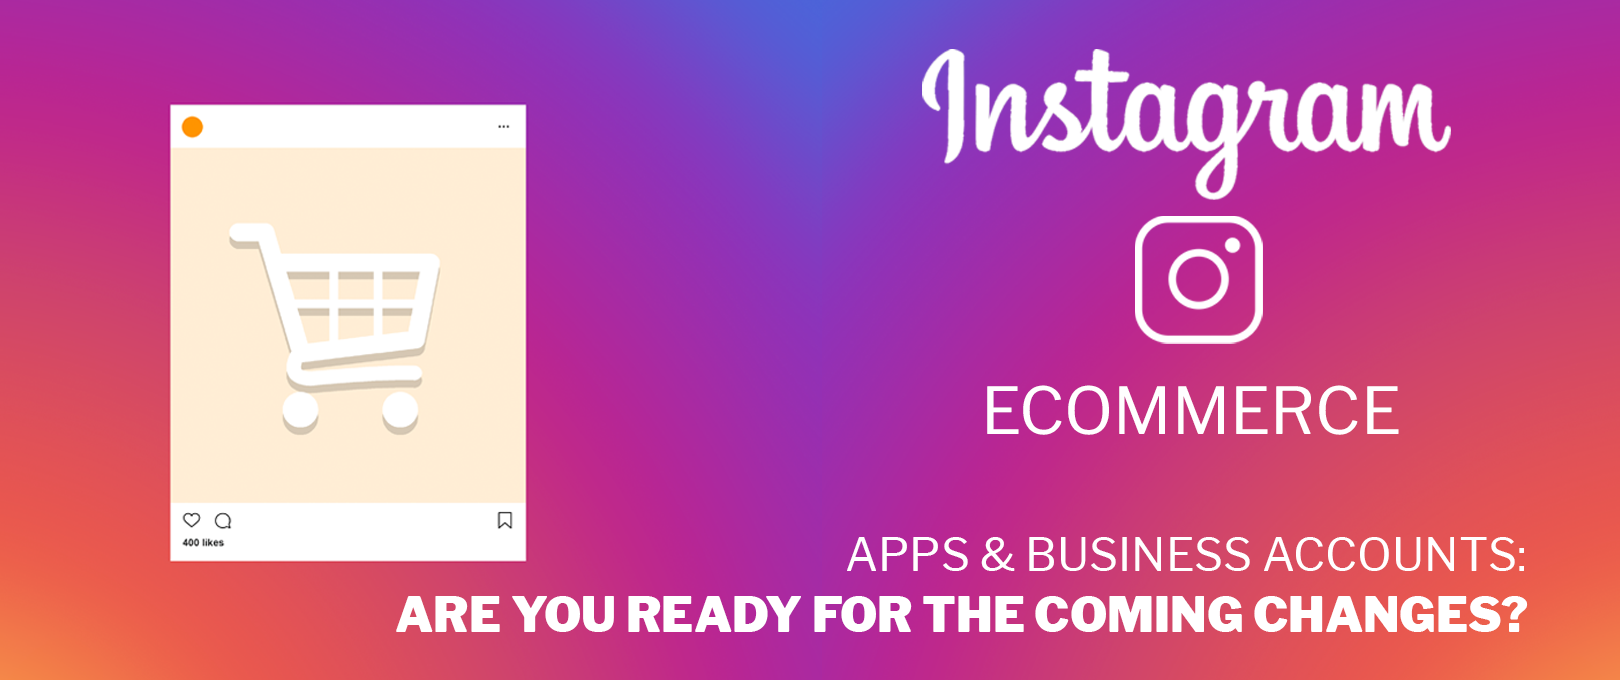 Instagram-Ecommerce-Apps-Business-Accounts